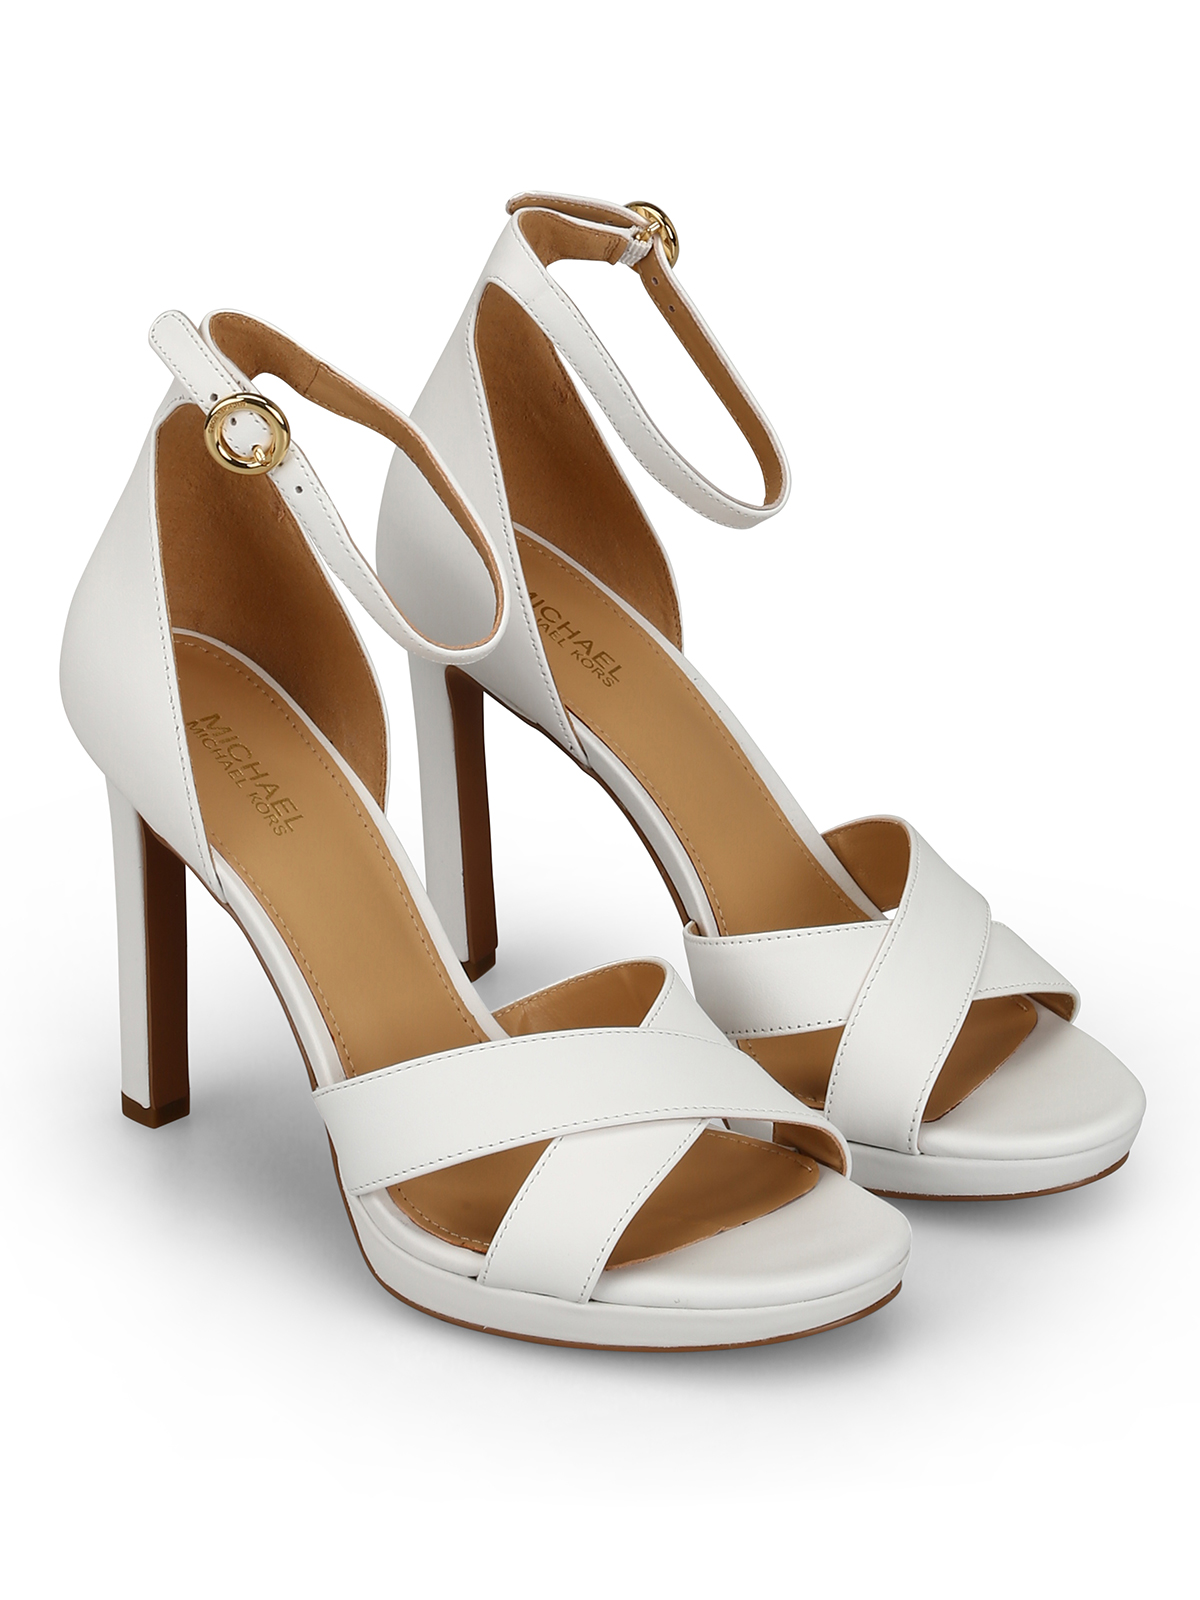 Michael Kors - Alexia white sandals 